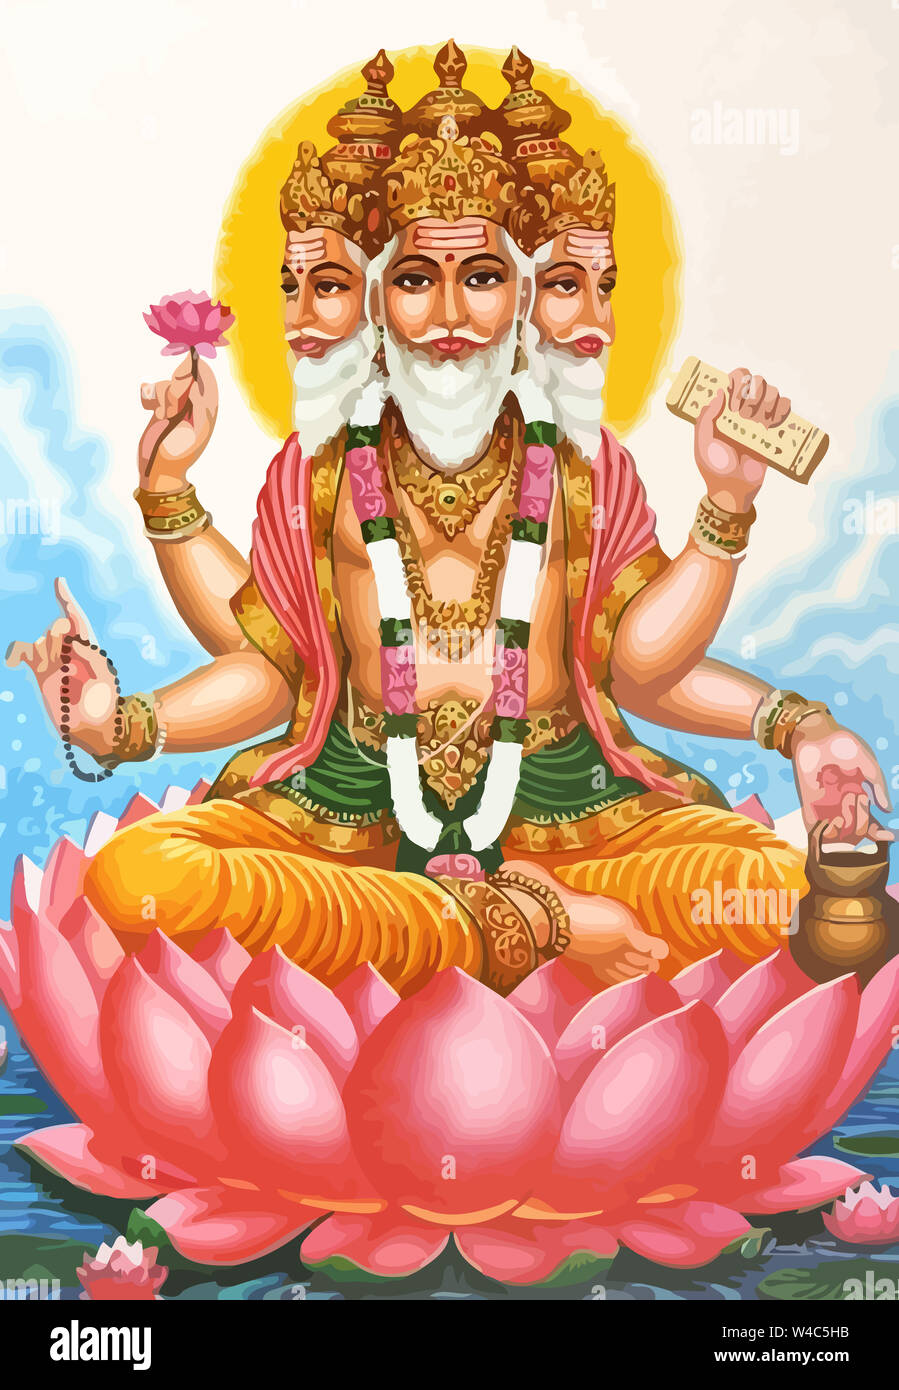 lord Brahma india culture holy god illustration Stock Photo